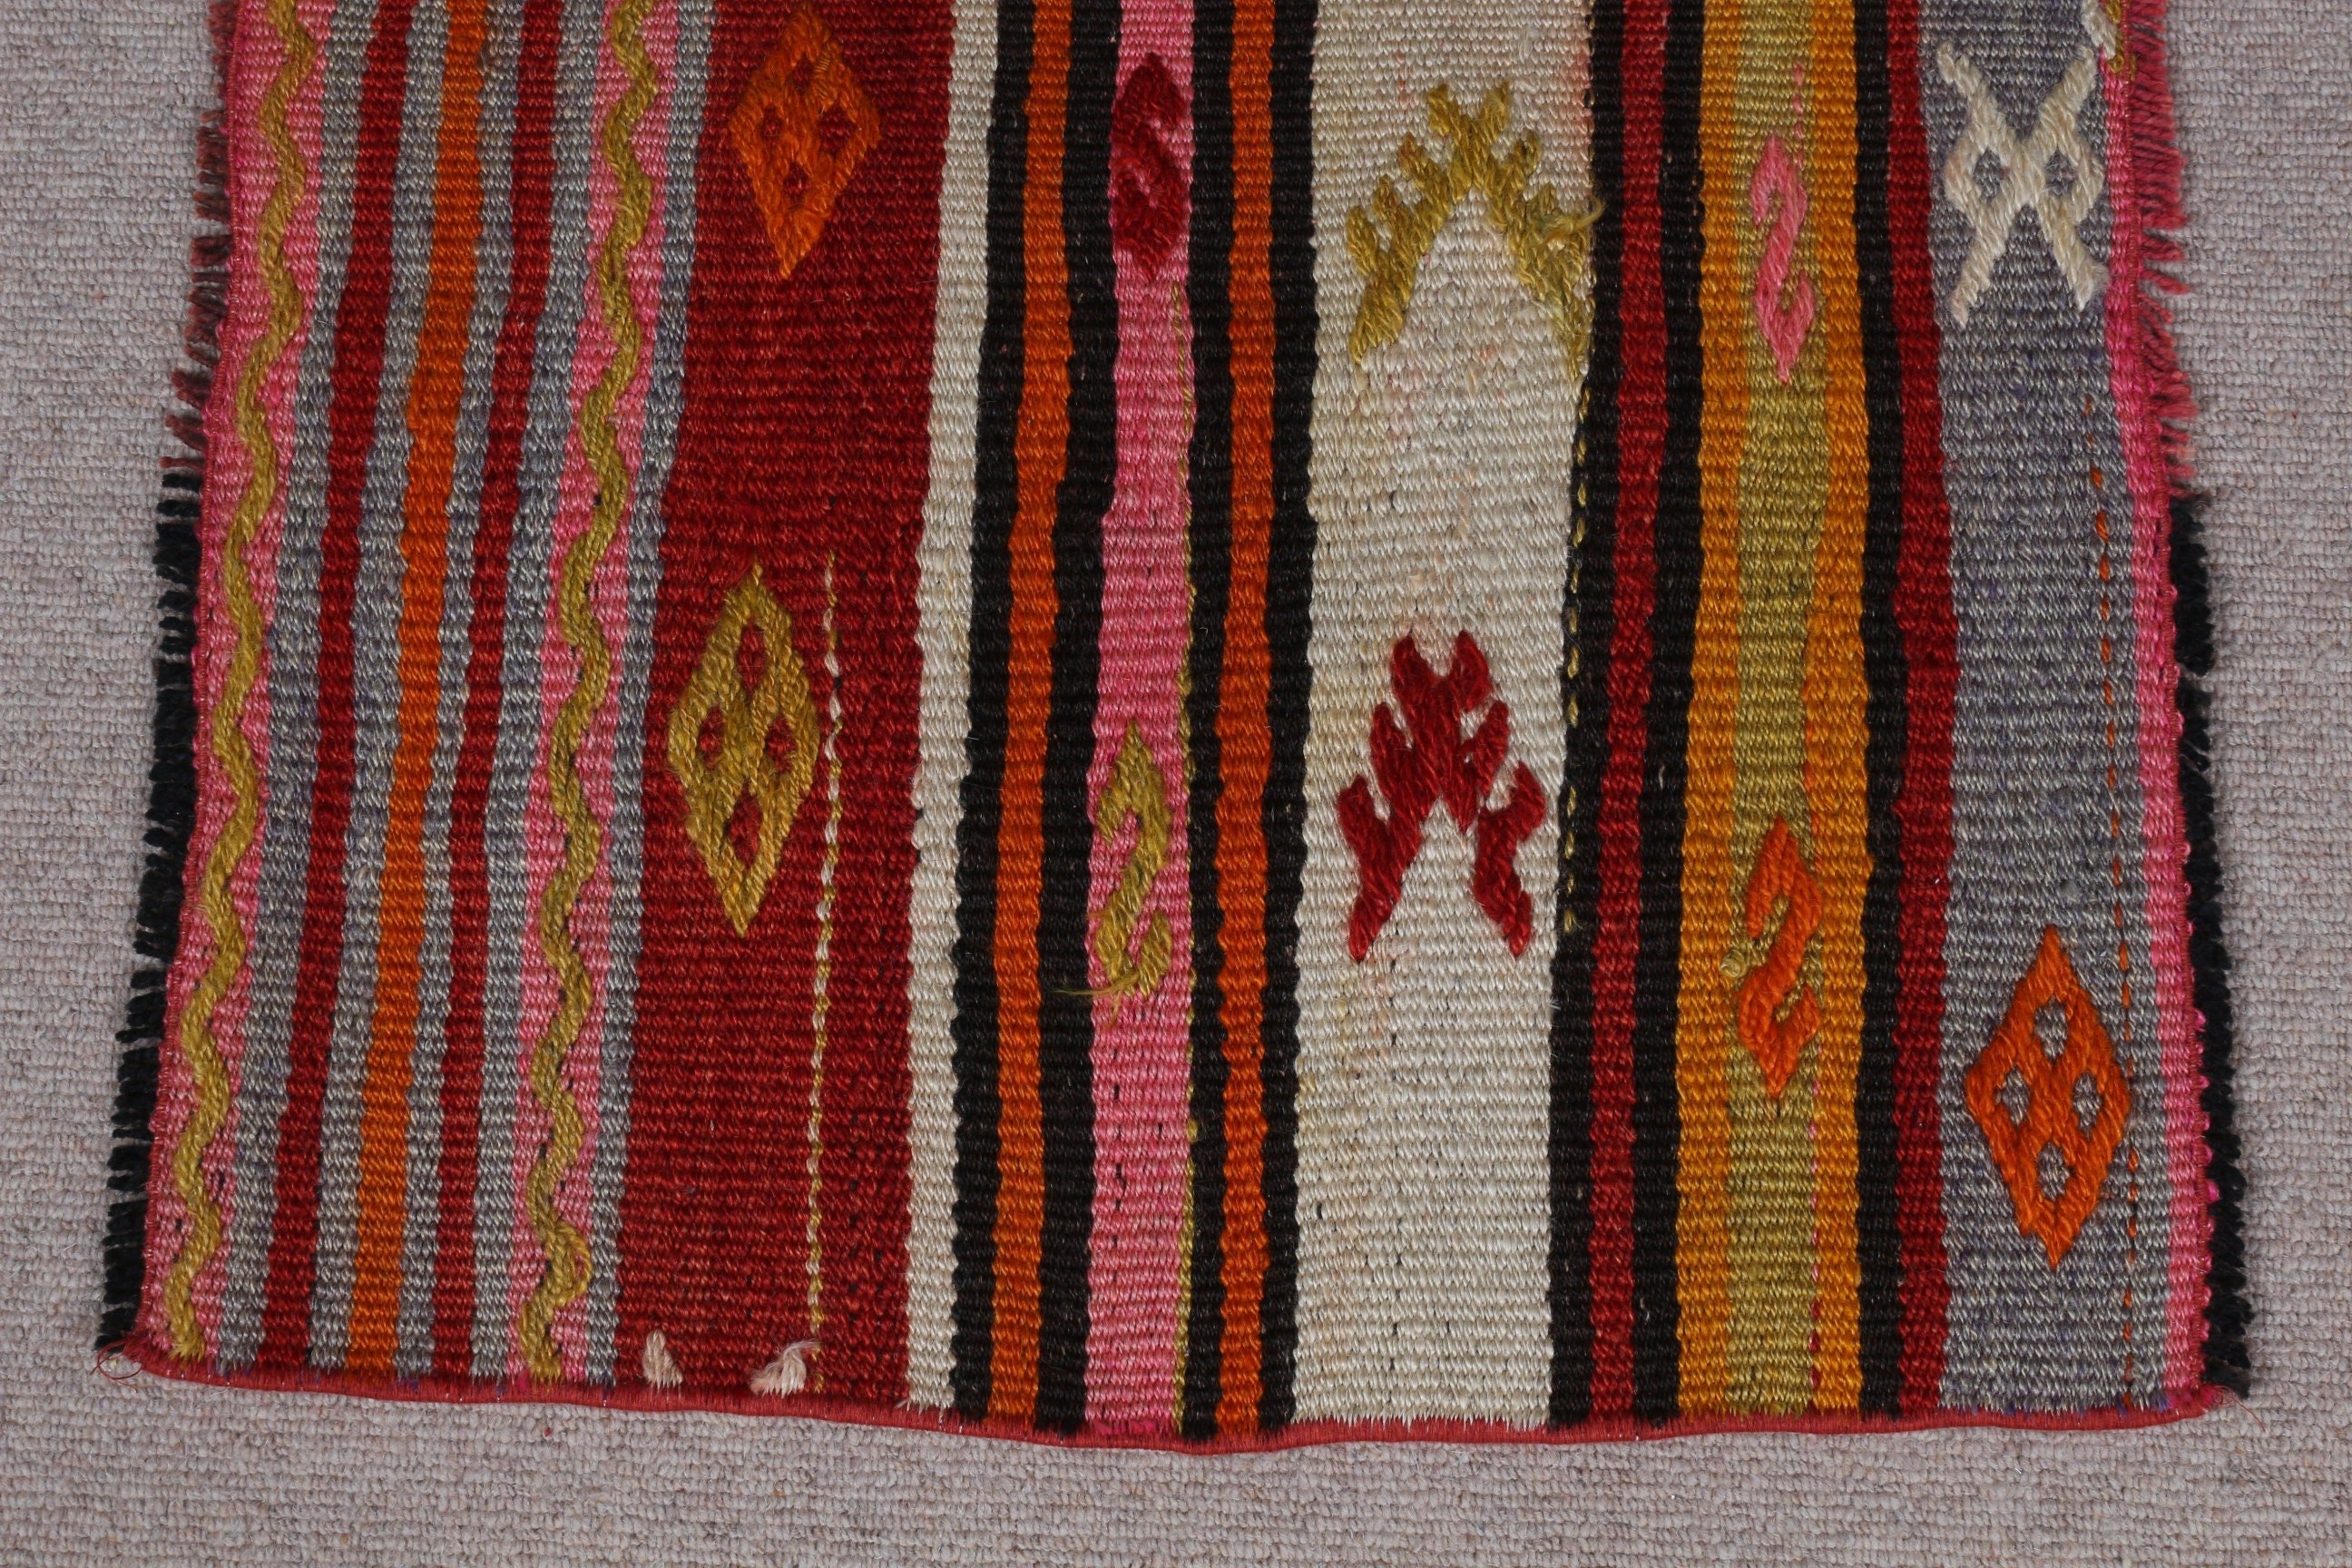 Vintage Rug, Turkish Rugs, Bathroom Rug, Retro Rug, Red Oriental Rug, Anatolian Rug, 2.5x1.9 ft Small Rug, Antique Rug, Nursery Rugs, Kilim